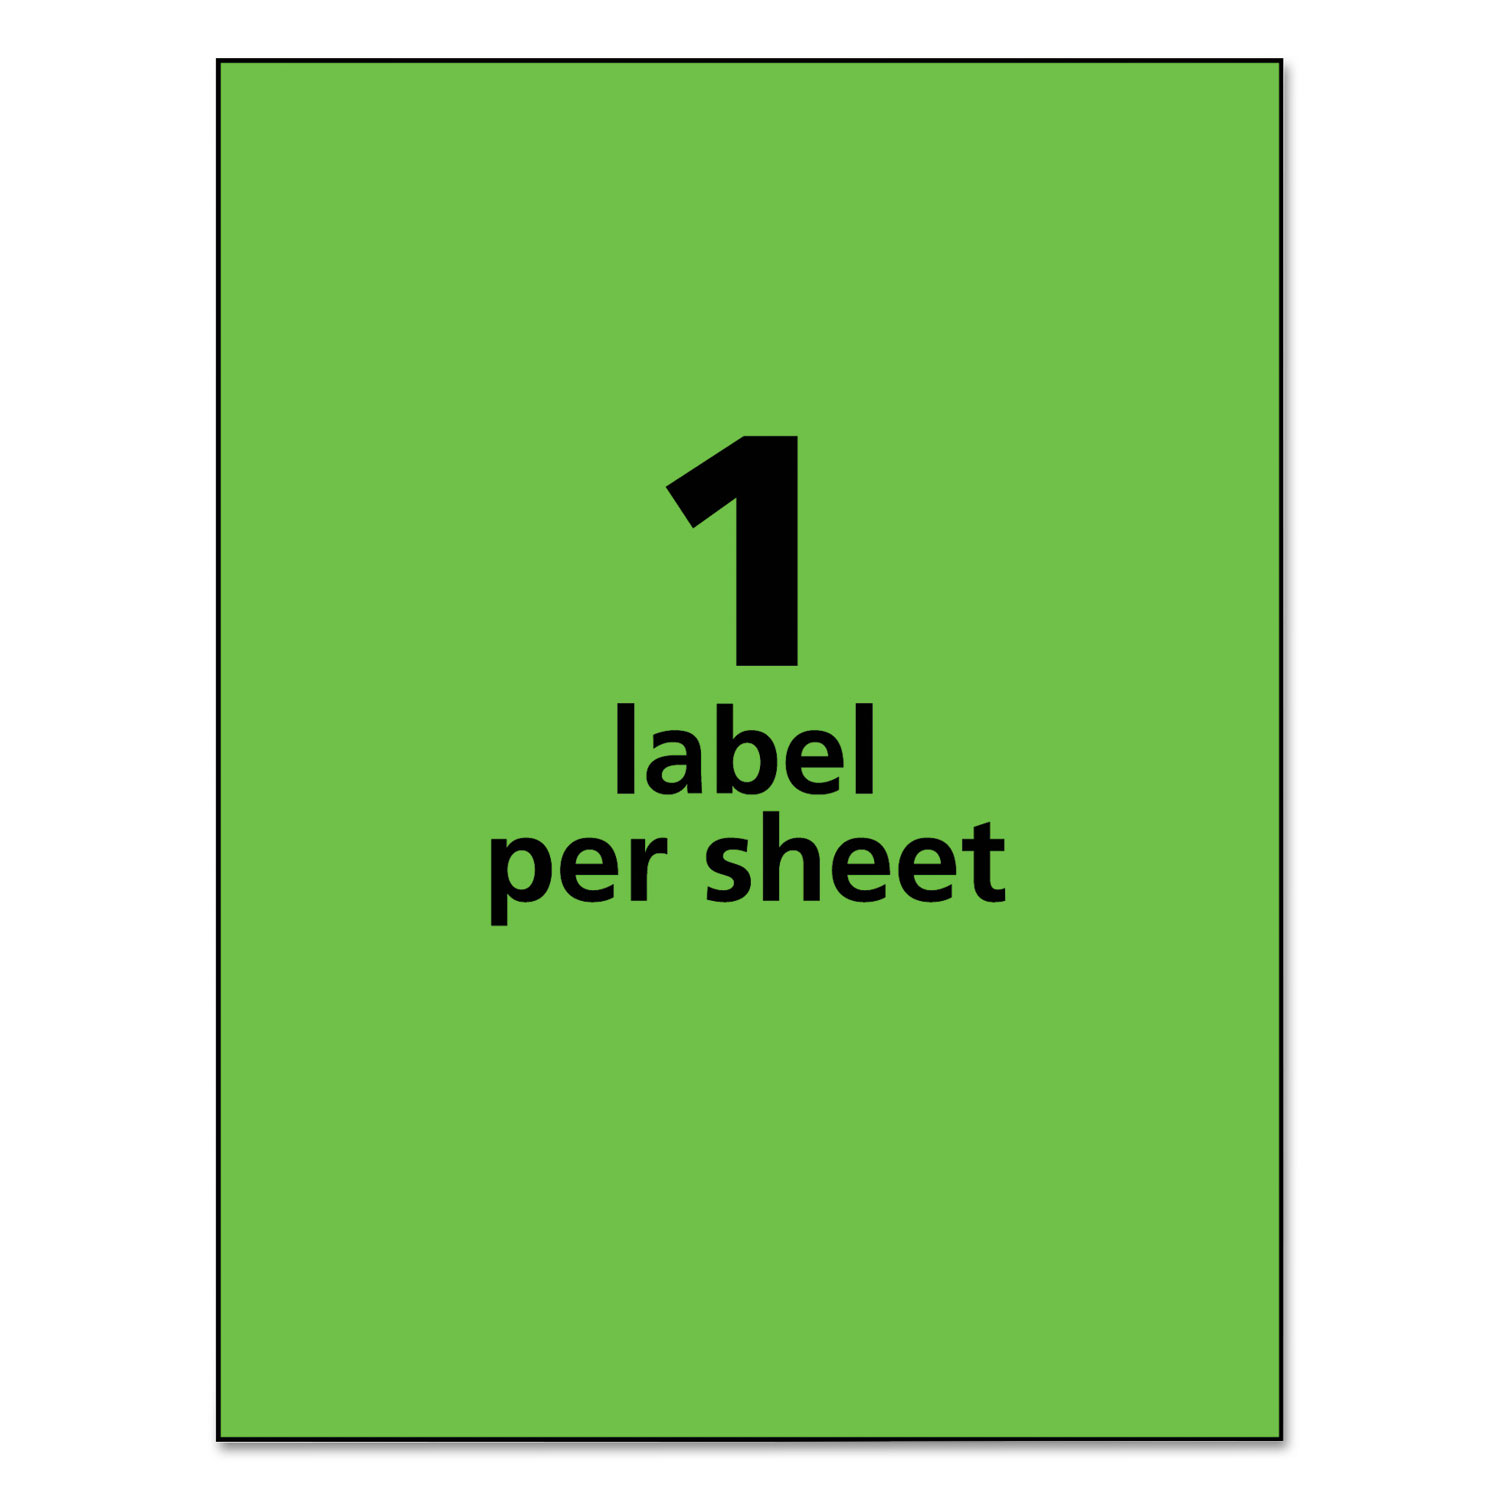 Neon Shipping Label, Laser, 8 1/2 x 11, Neon Green, 100/Box